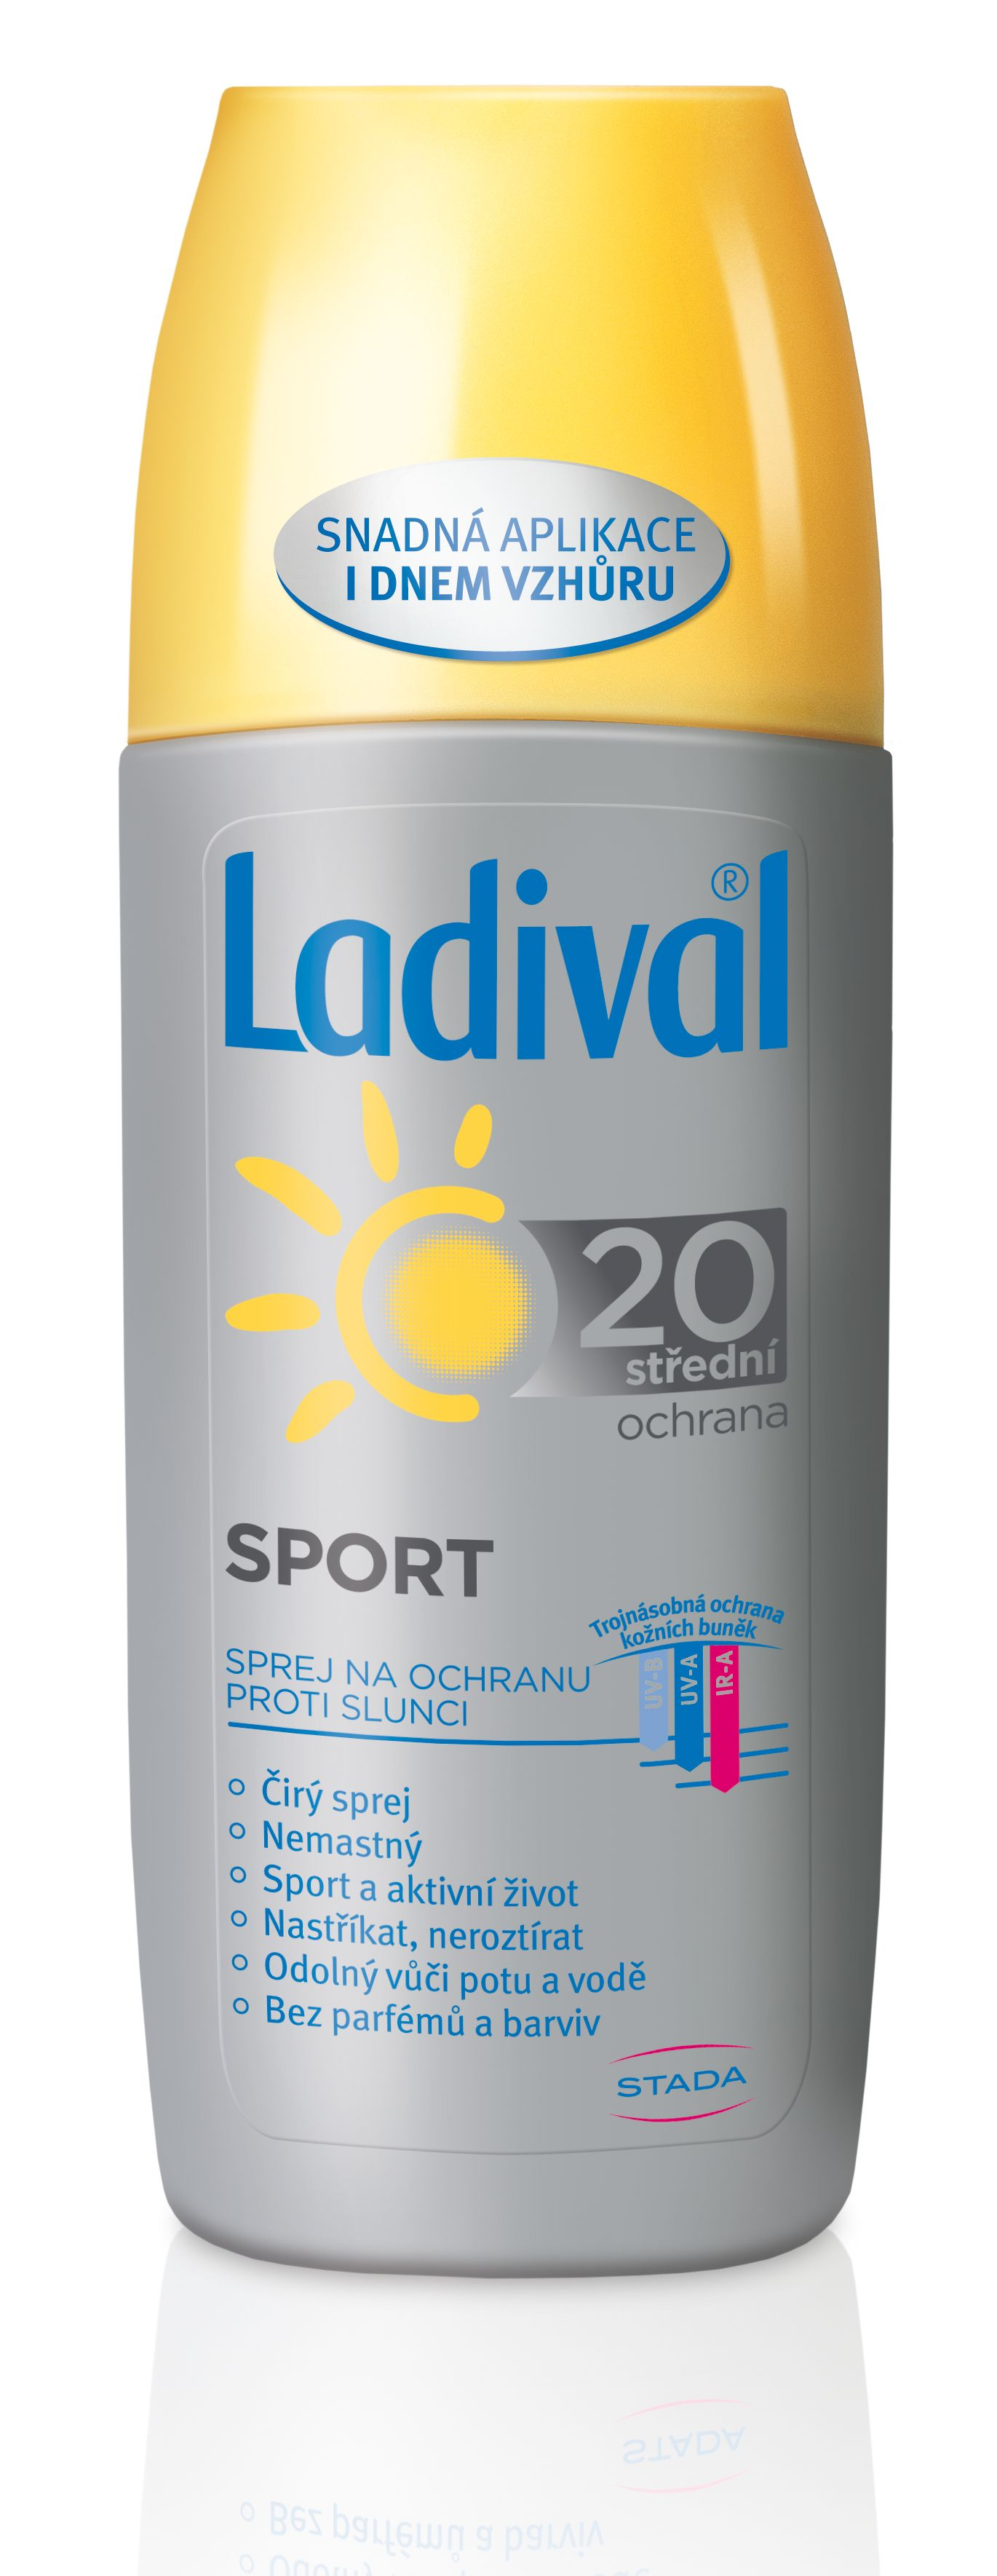 Ladival Ochrana proti slunci OF20 sprej 150 ml Ladival